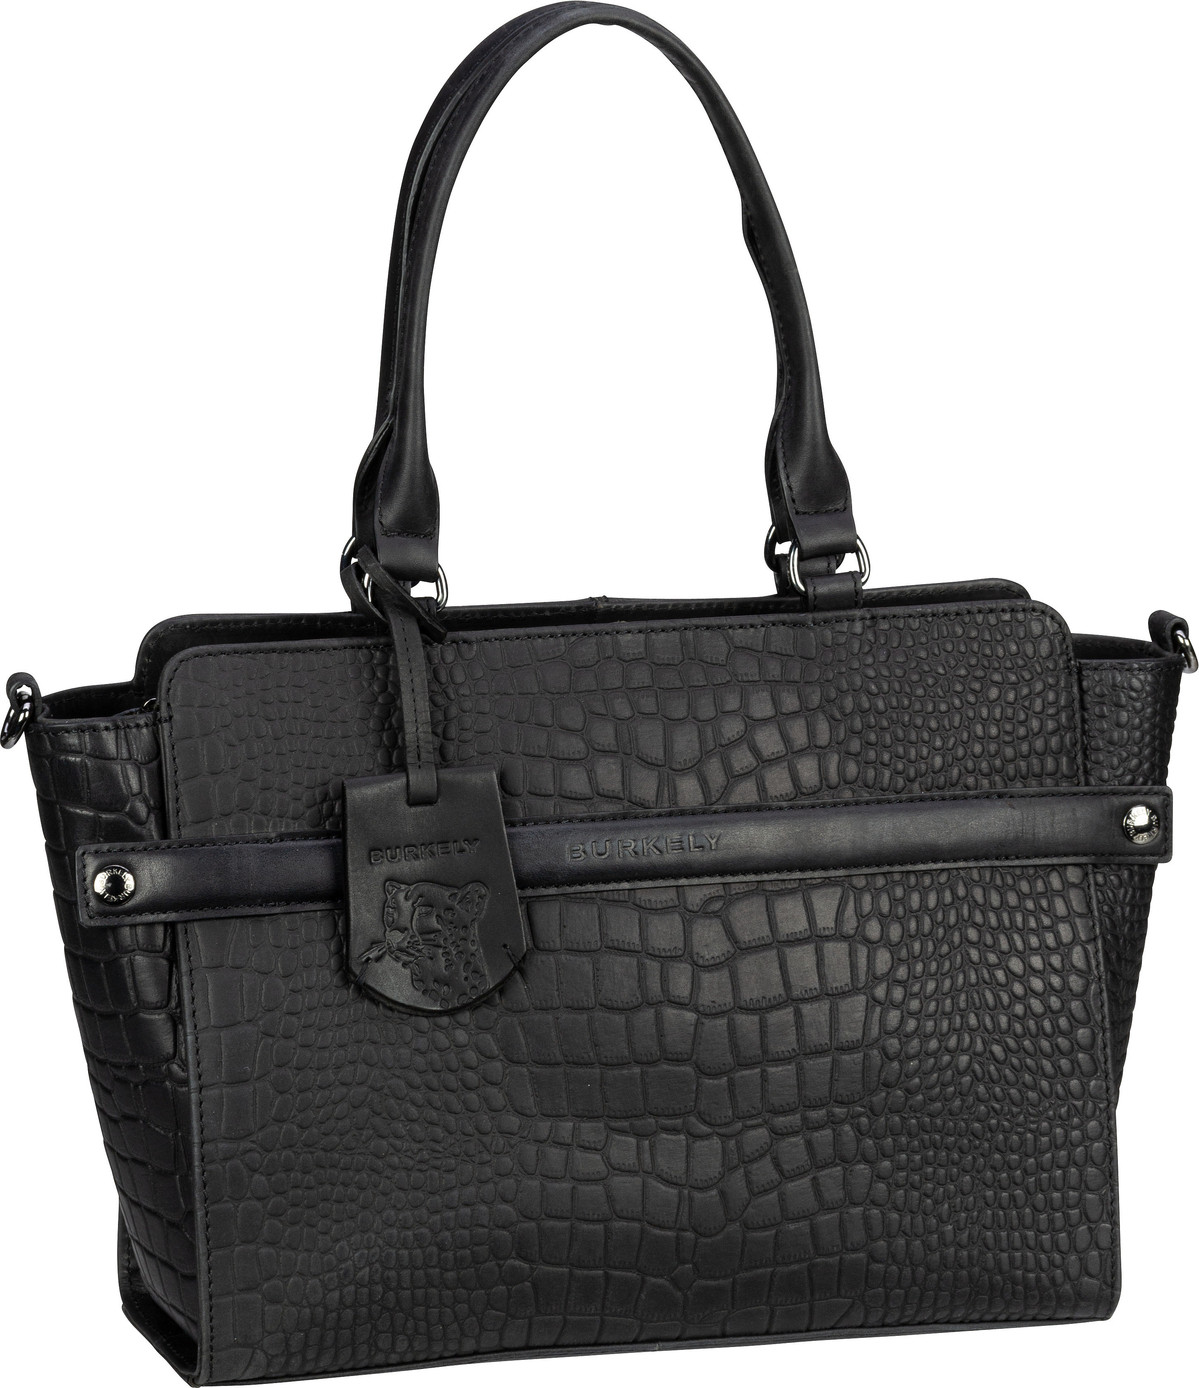 Burkely Casual Carly Handbag - Black